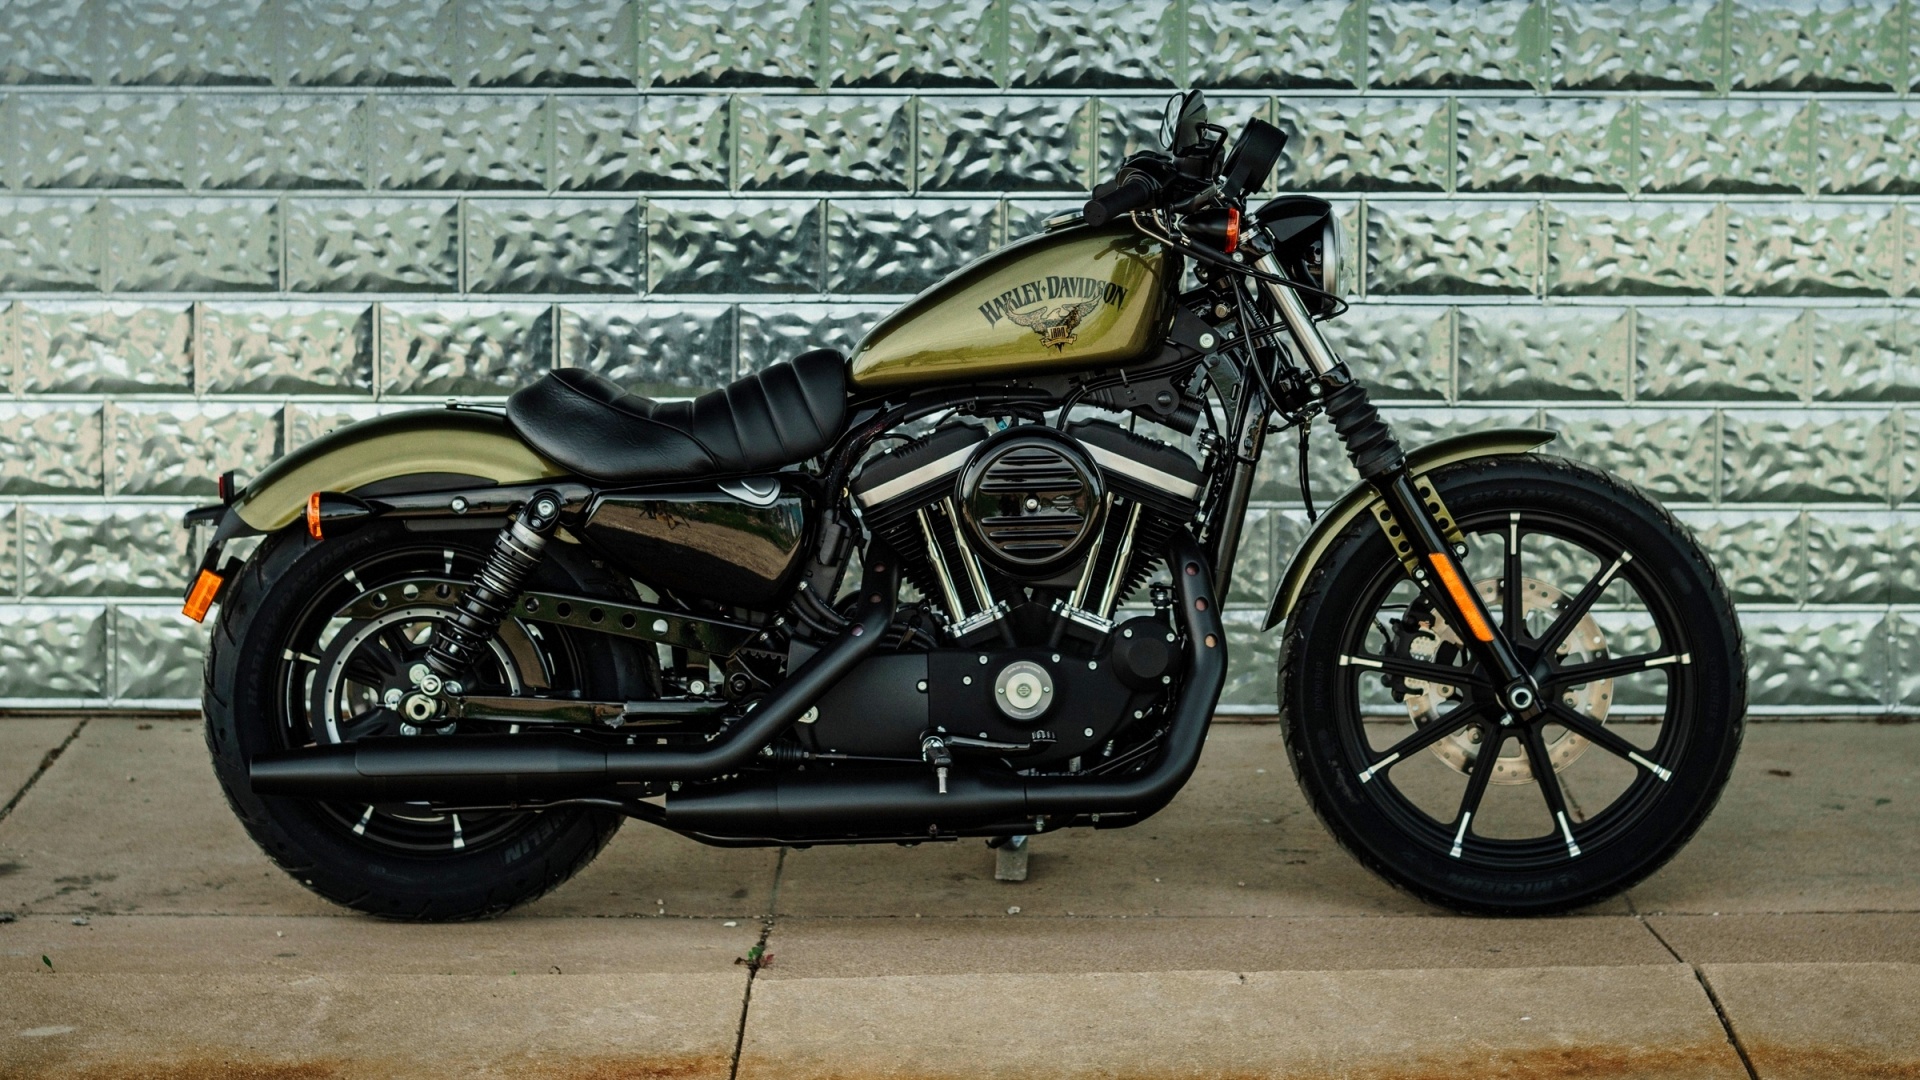 Harley Davidson Iron 883 2016 Wallpapers - 1920x1080 - 809620